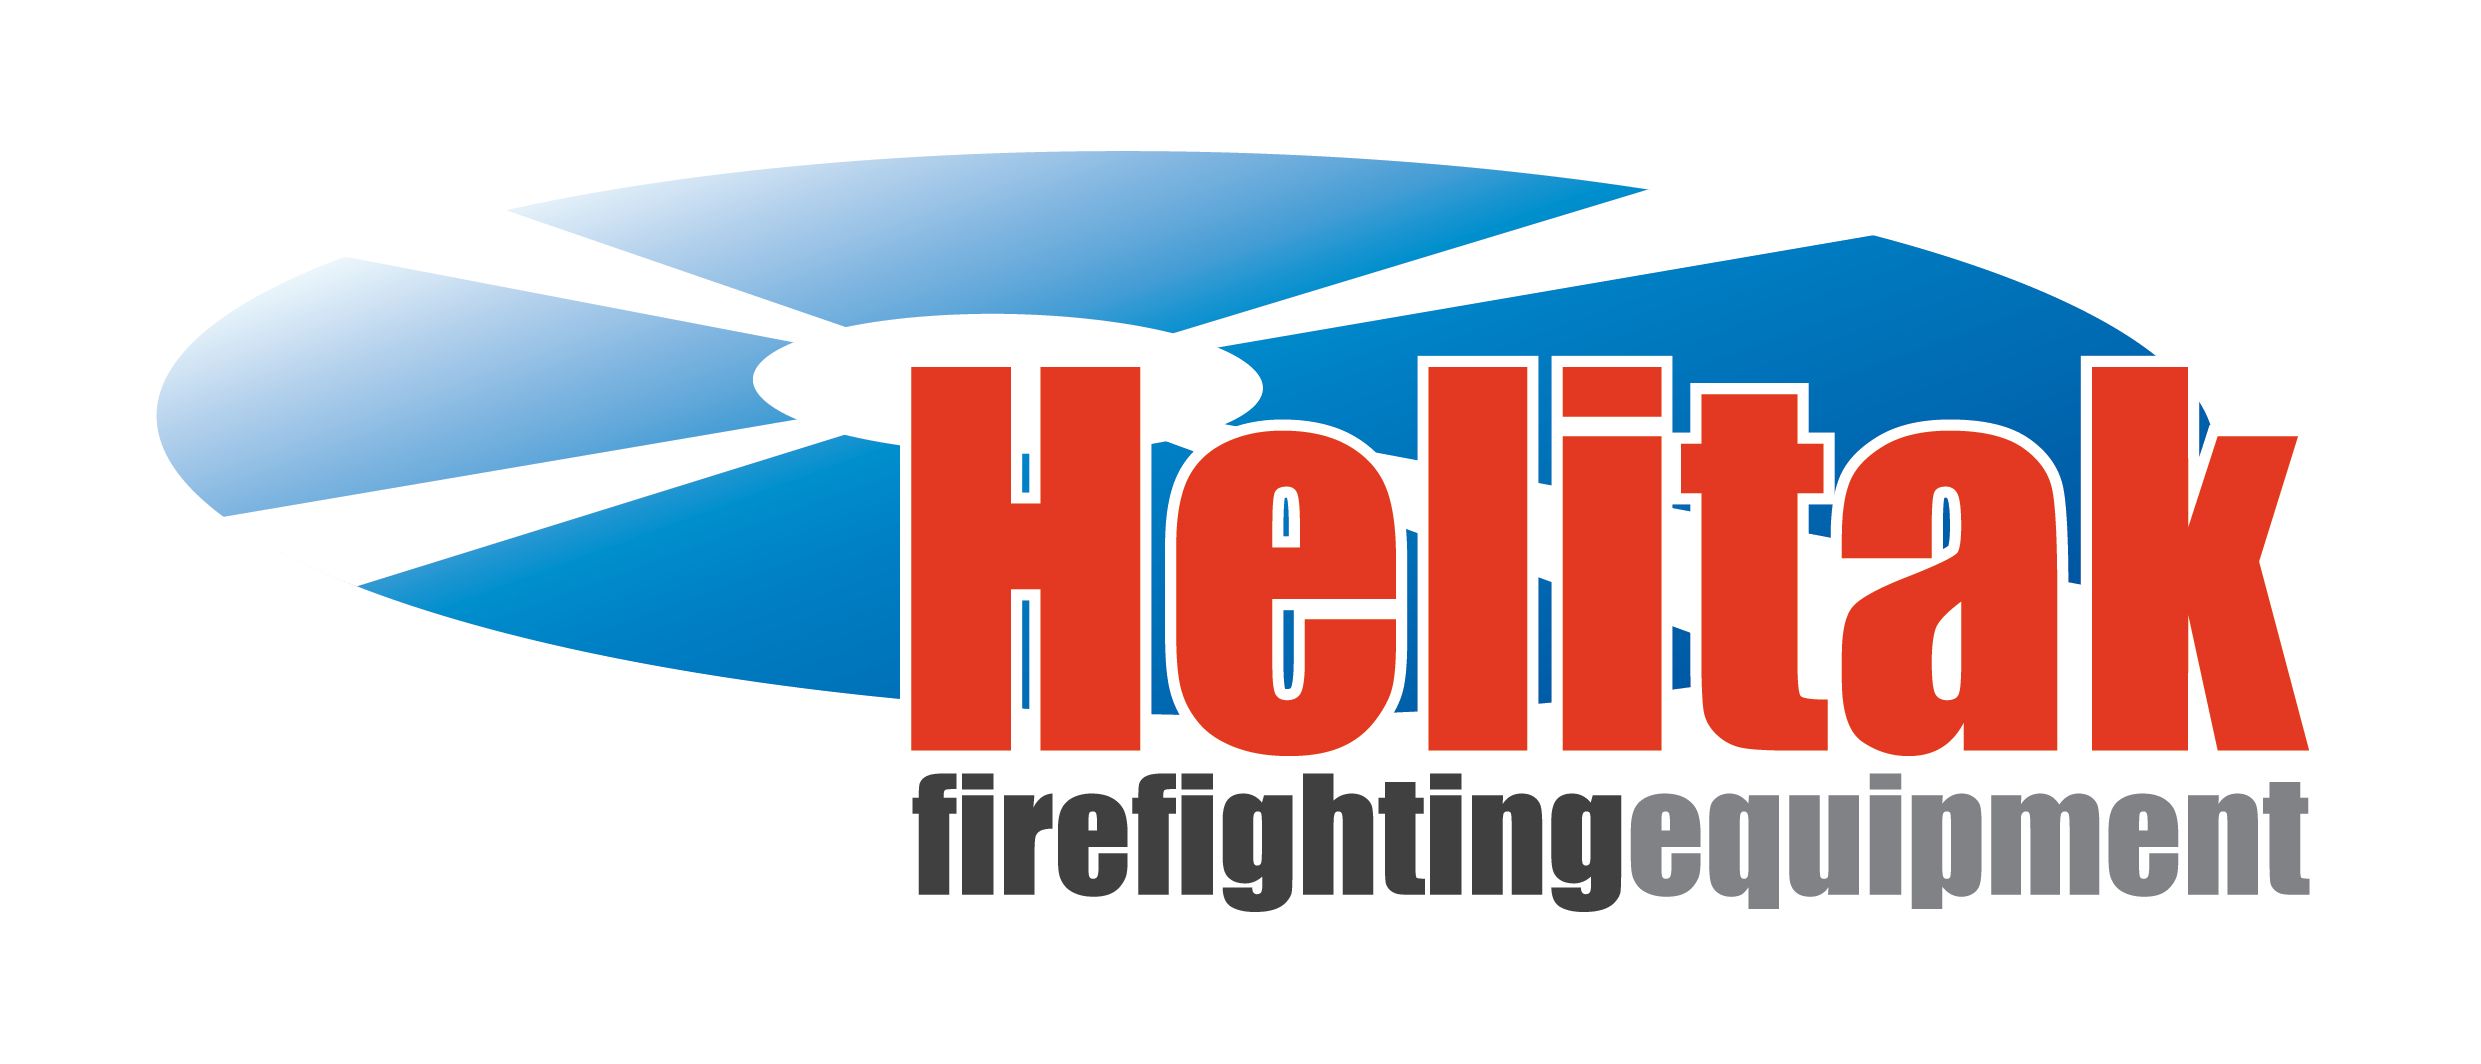 Helitak Fire Fighting Equipment